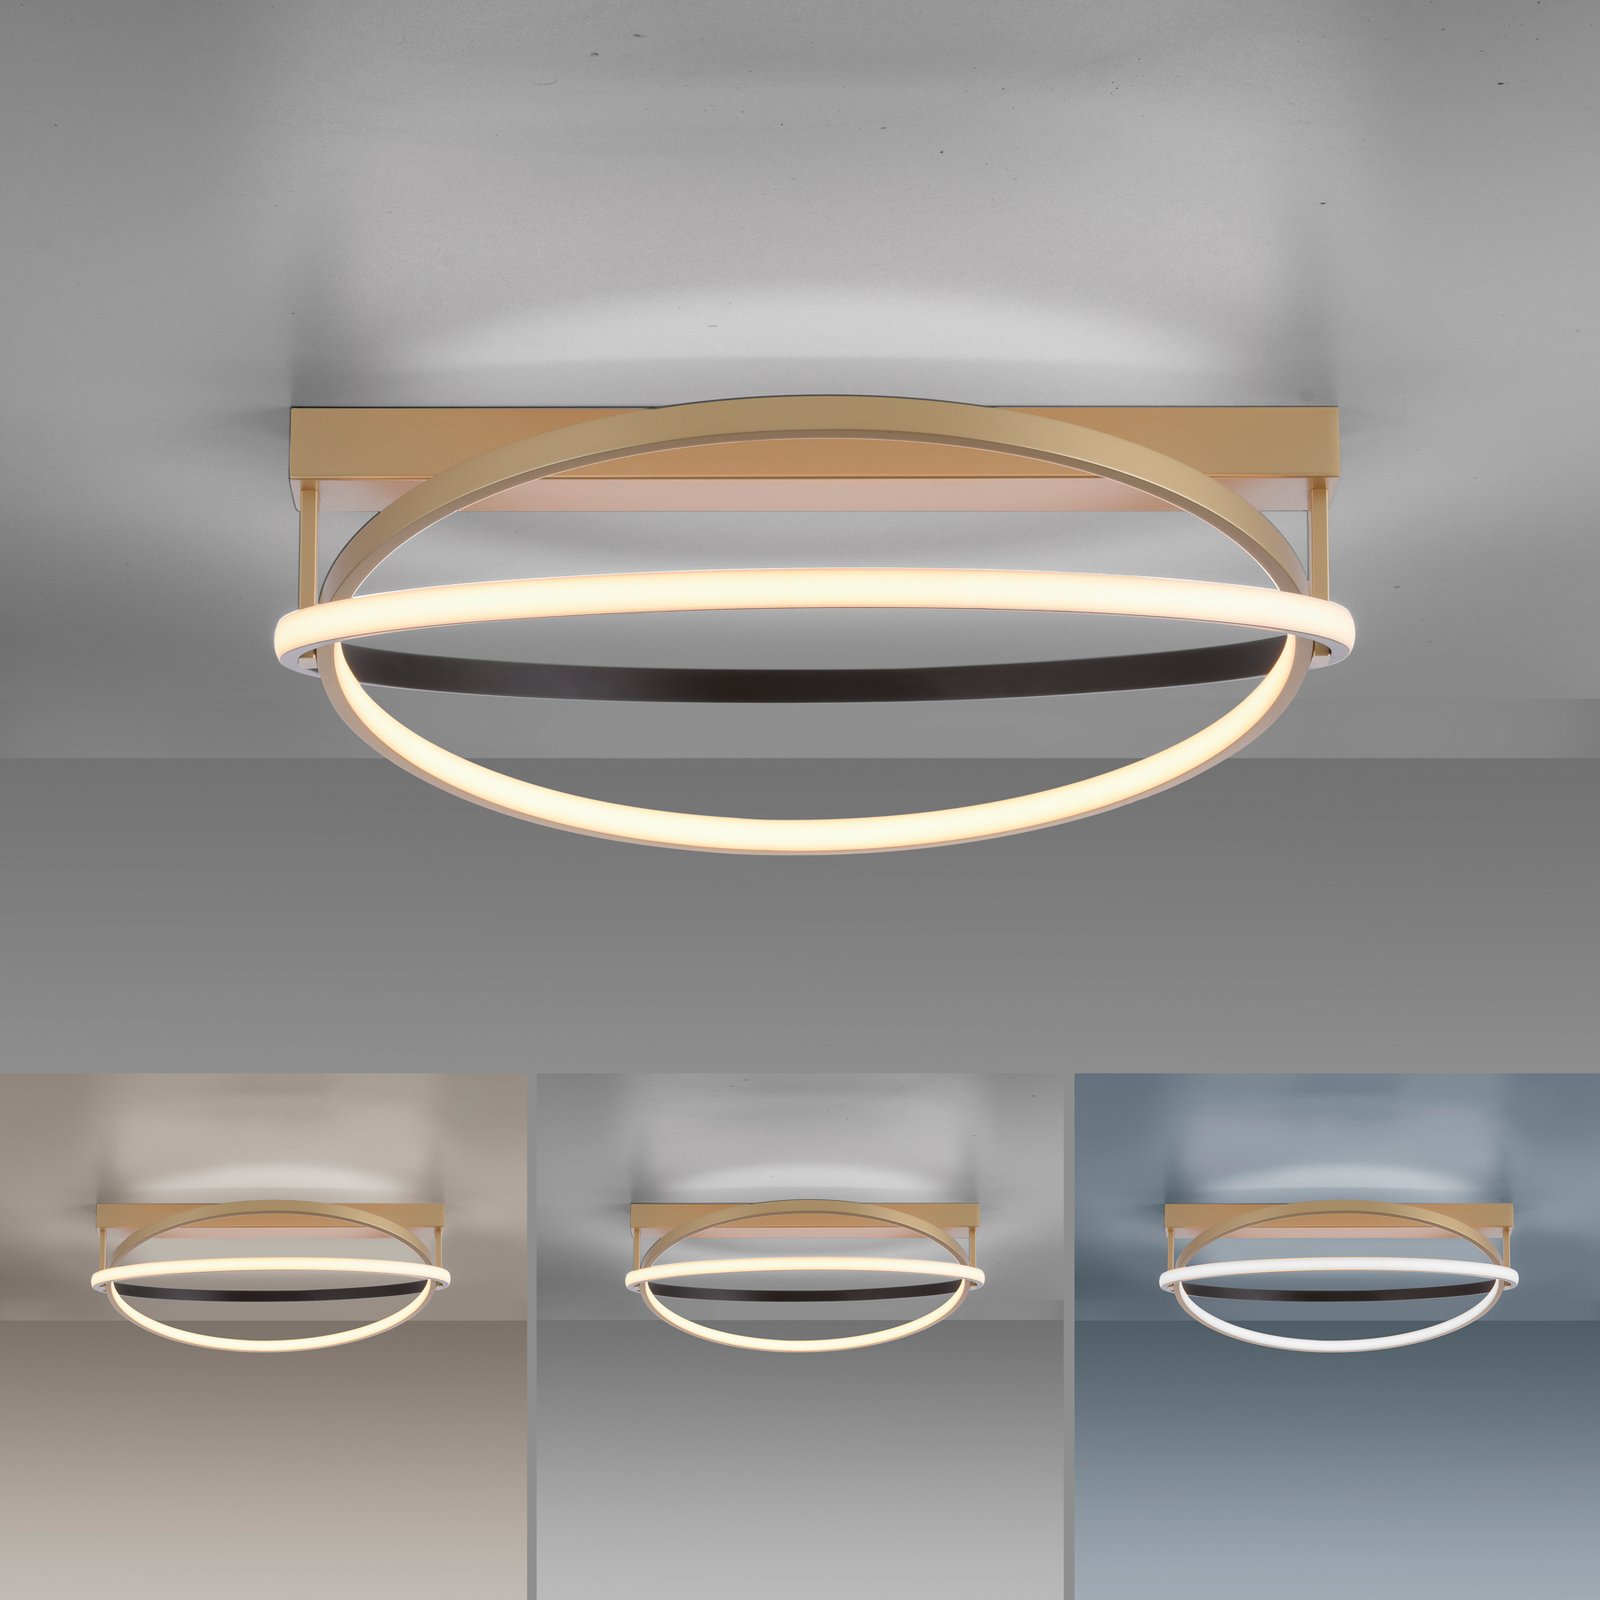 Paul Neuhaus Q-Beluga LED stropní světlo, mosaz